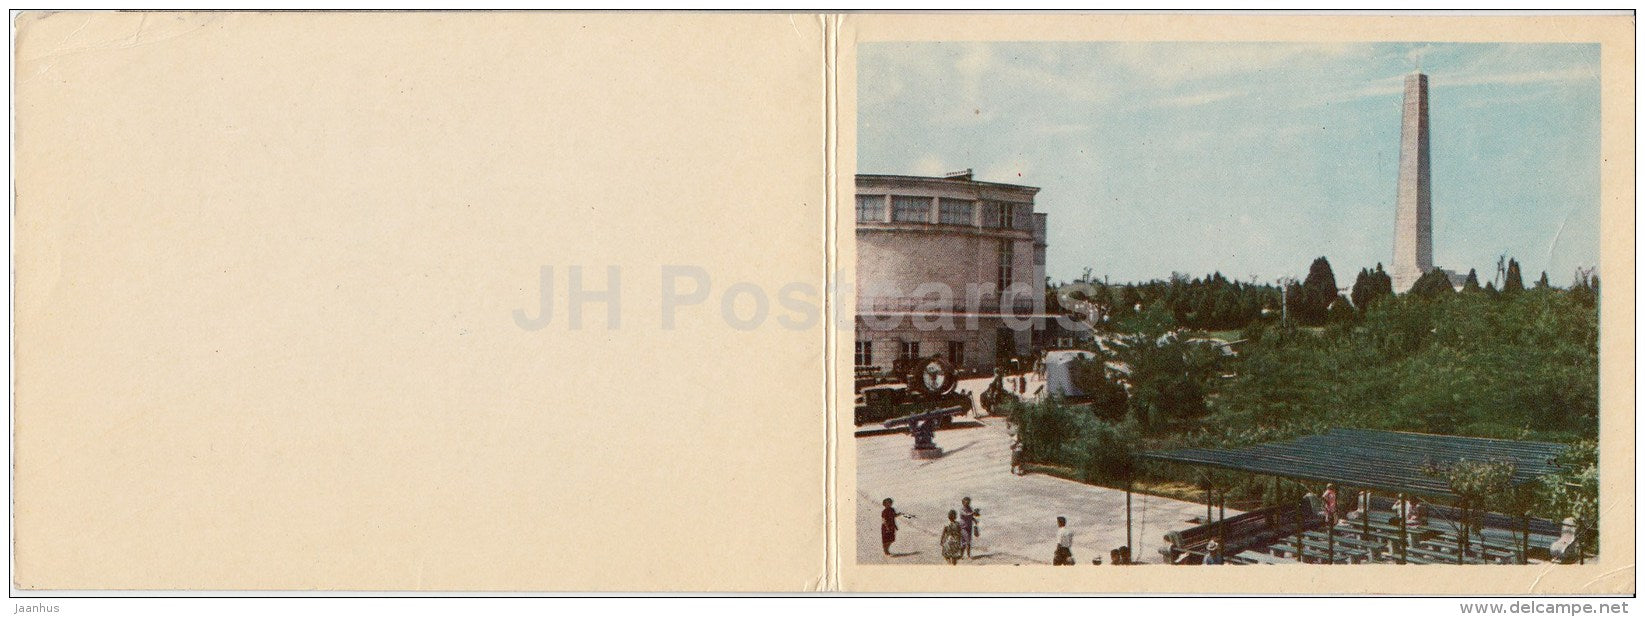 diorama Storm of Sapun Gora on May 1944 and Monument of Glory - Sevastopol - Crimea - 1968 - Ukraine USSR - unused - JH Postcards